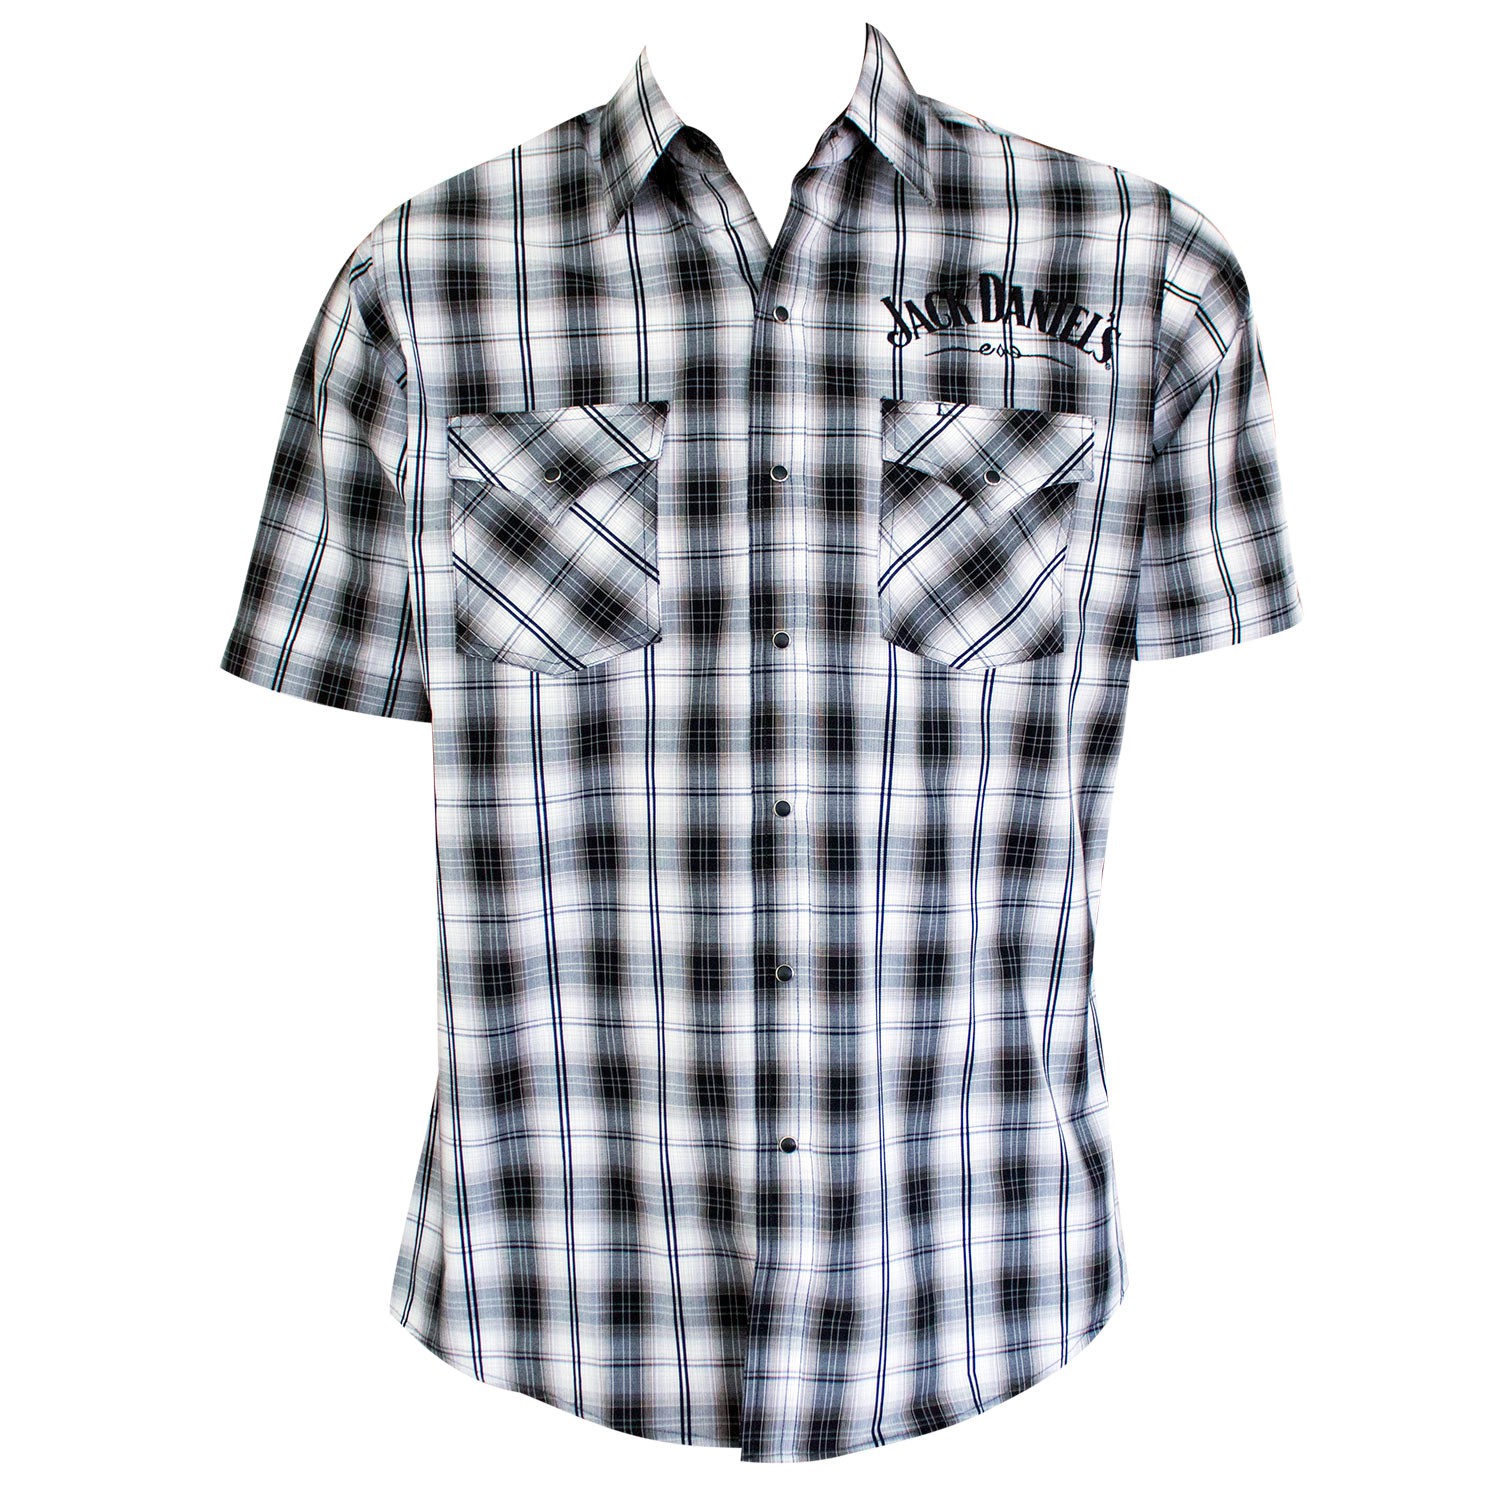 Jack Daniels Plaid Short Sleeve Button Down Shirt